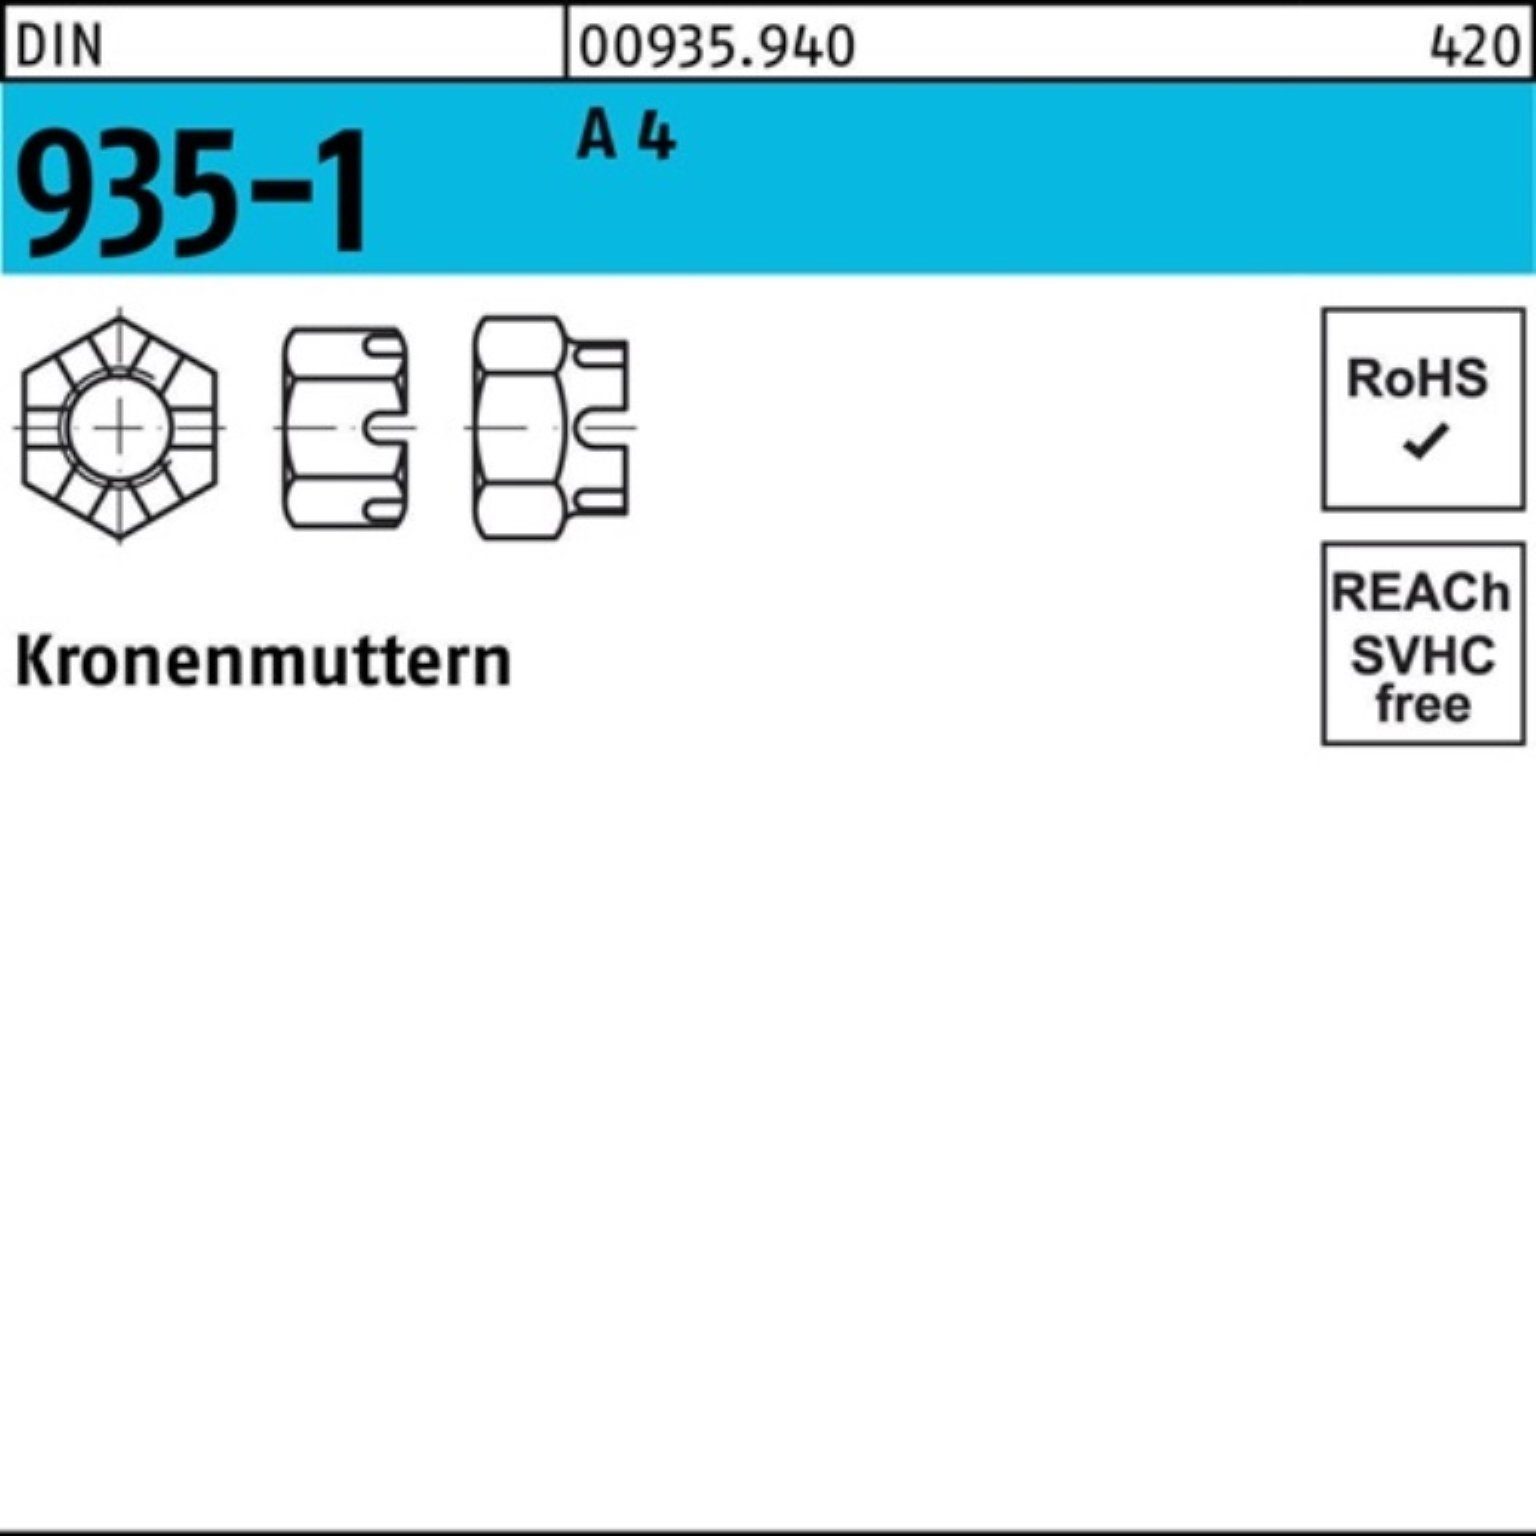 Reyher Kronenmutter 100er Pack Kronenmutter DIN 935-1 M30 A 4 1 Stück DIN 935-1 A 4 Krone